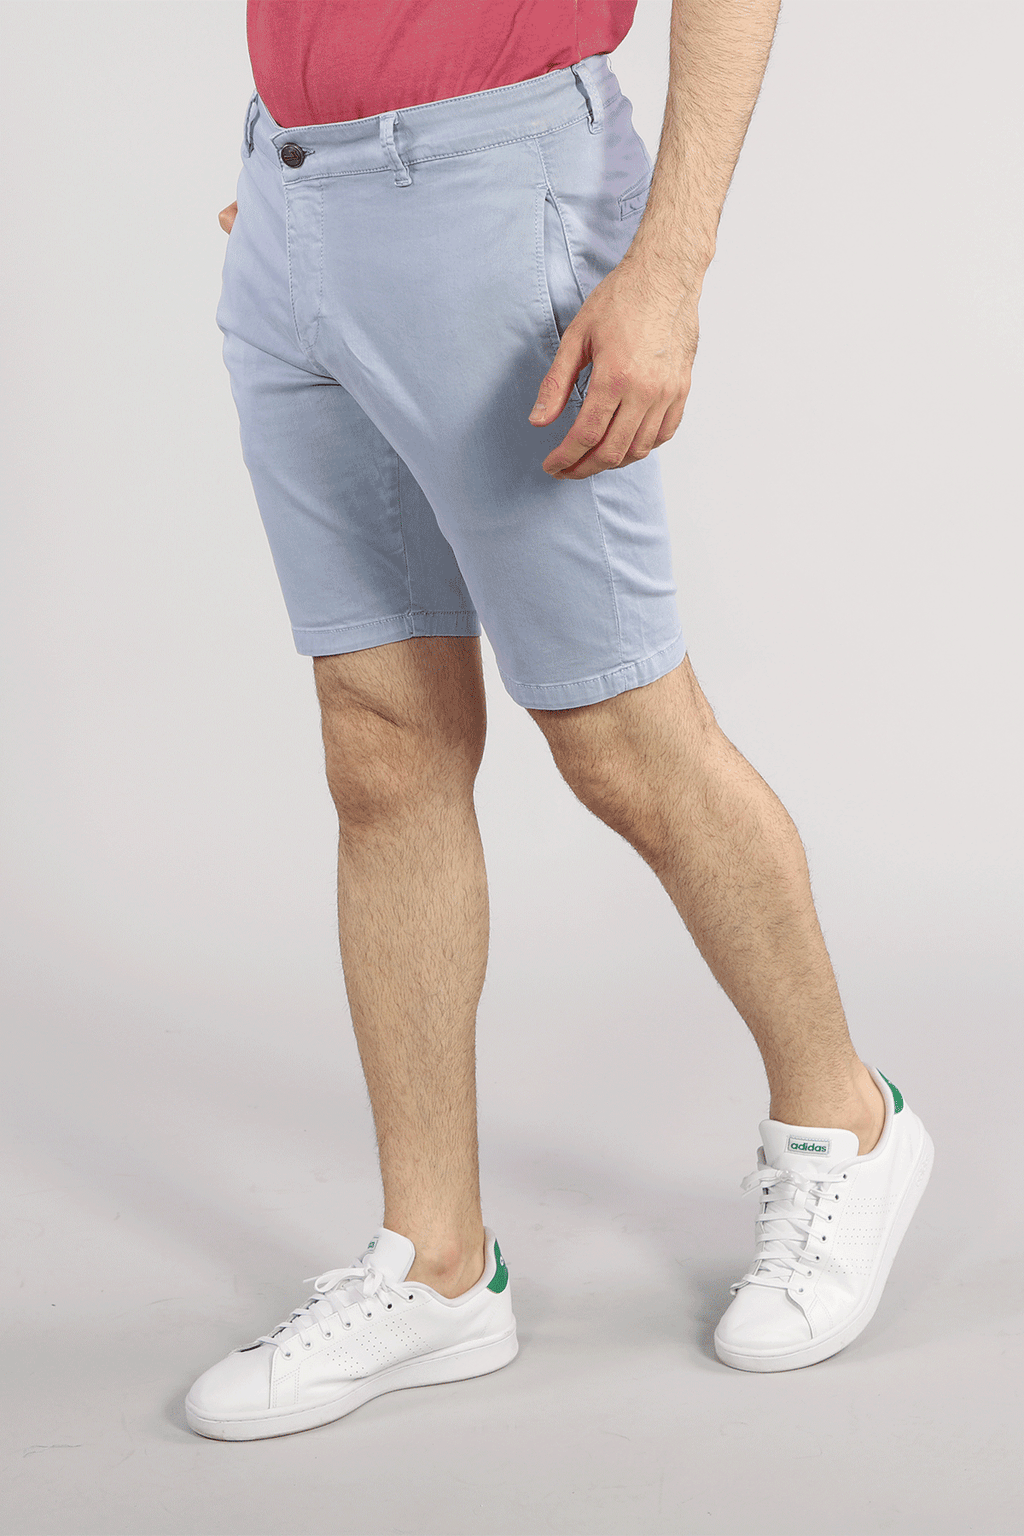 Aqua Shorts - 7 Downie St.®